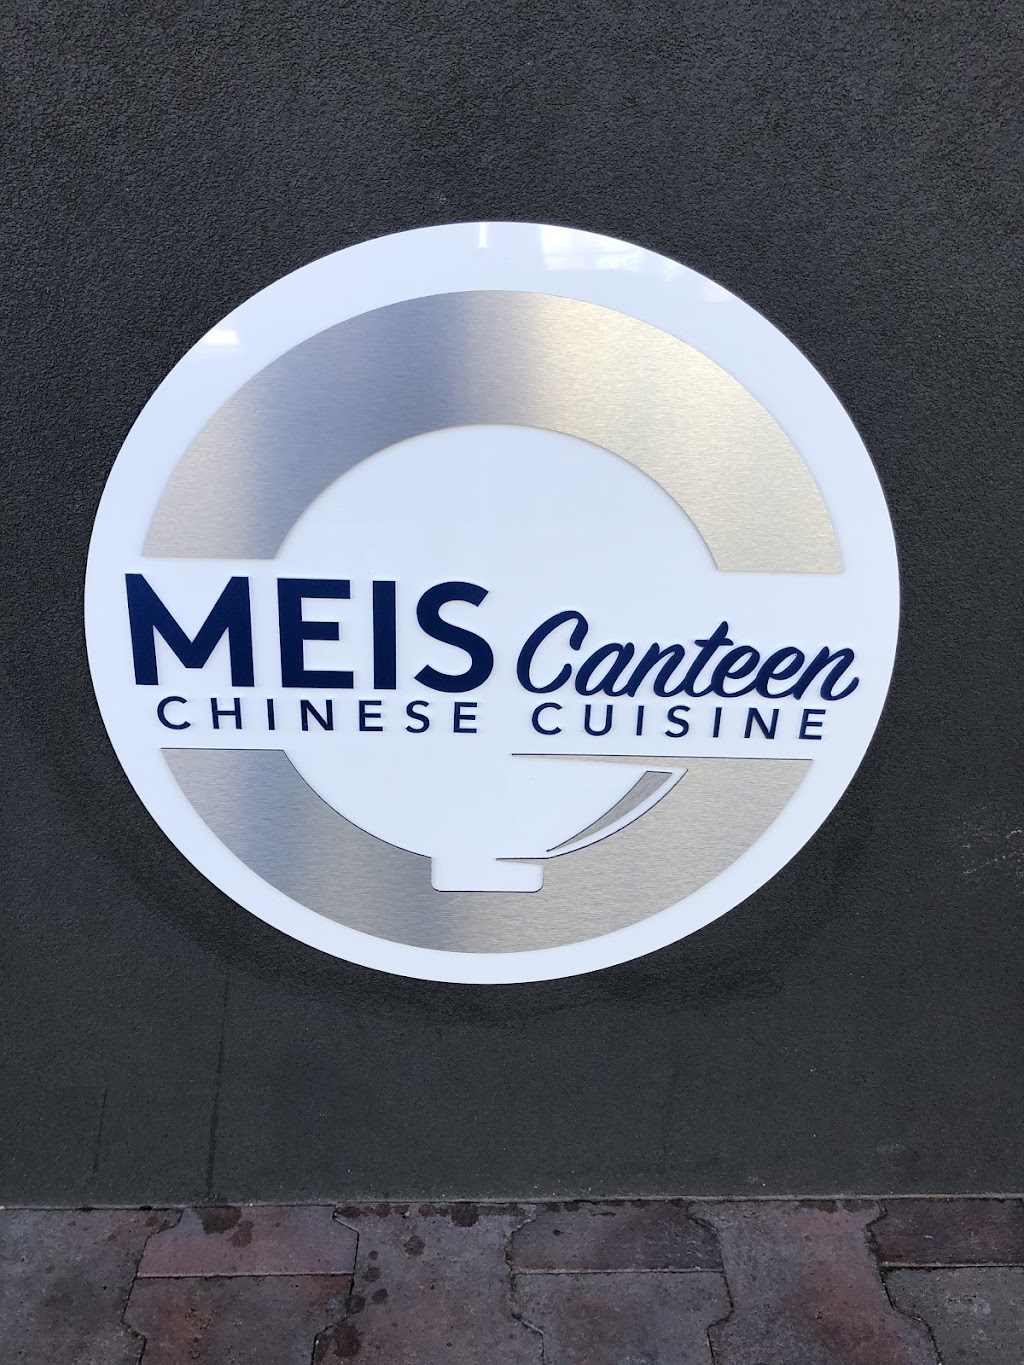 MEIS Canteen | 2/117 Prospect Rd, Prospect SA 5082, Australia | Phone: 0451 889 788